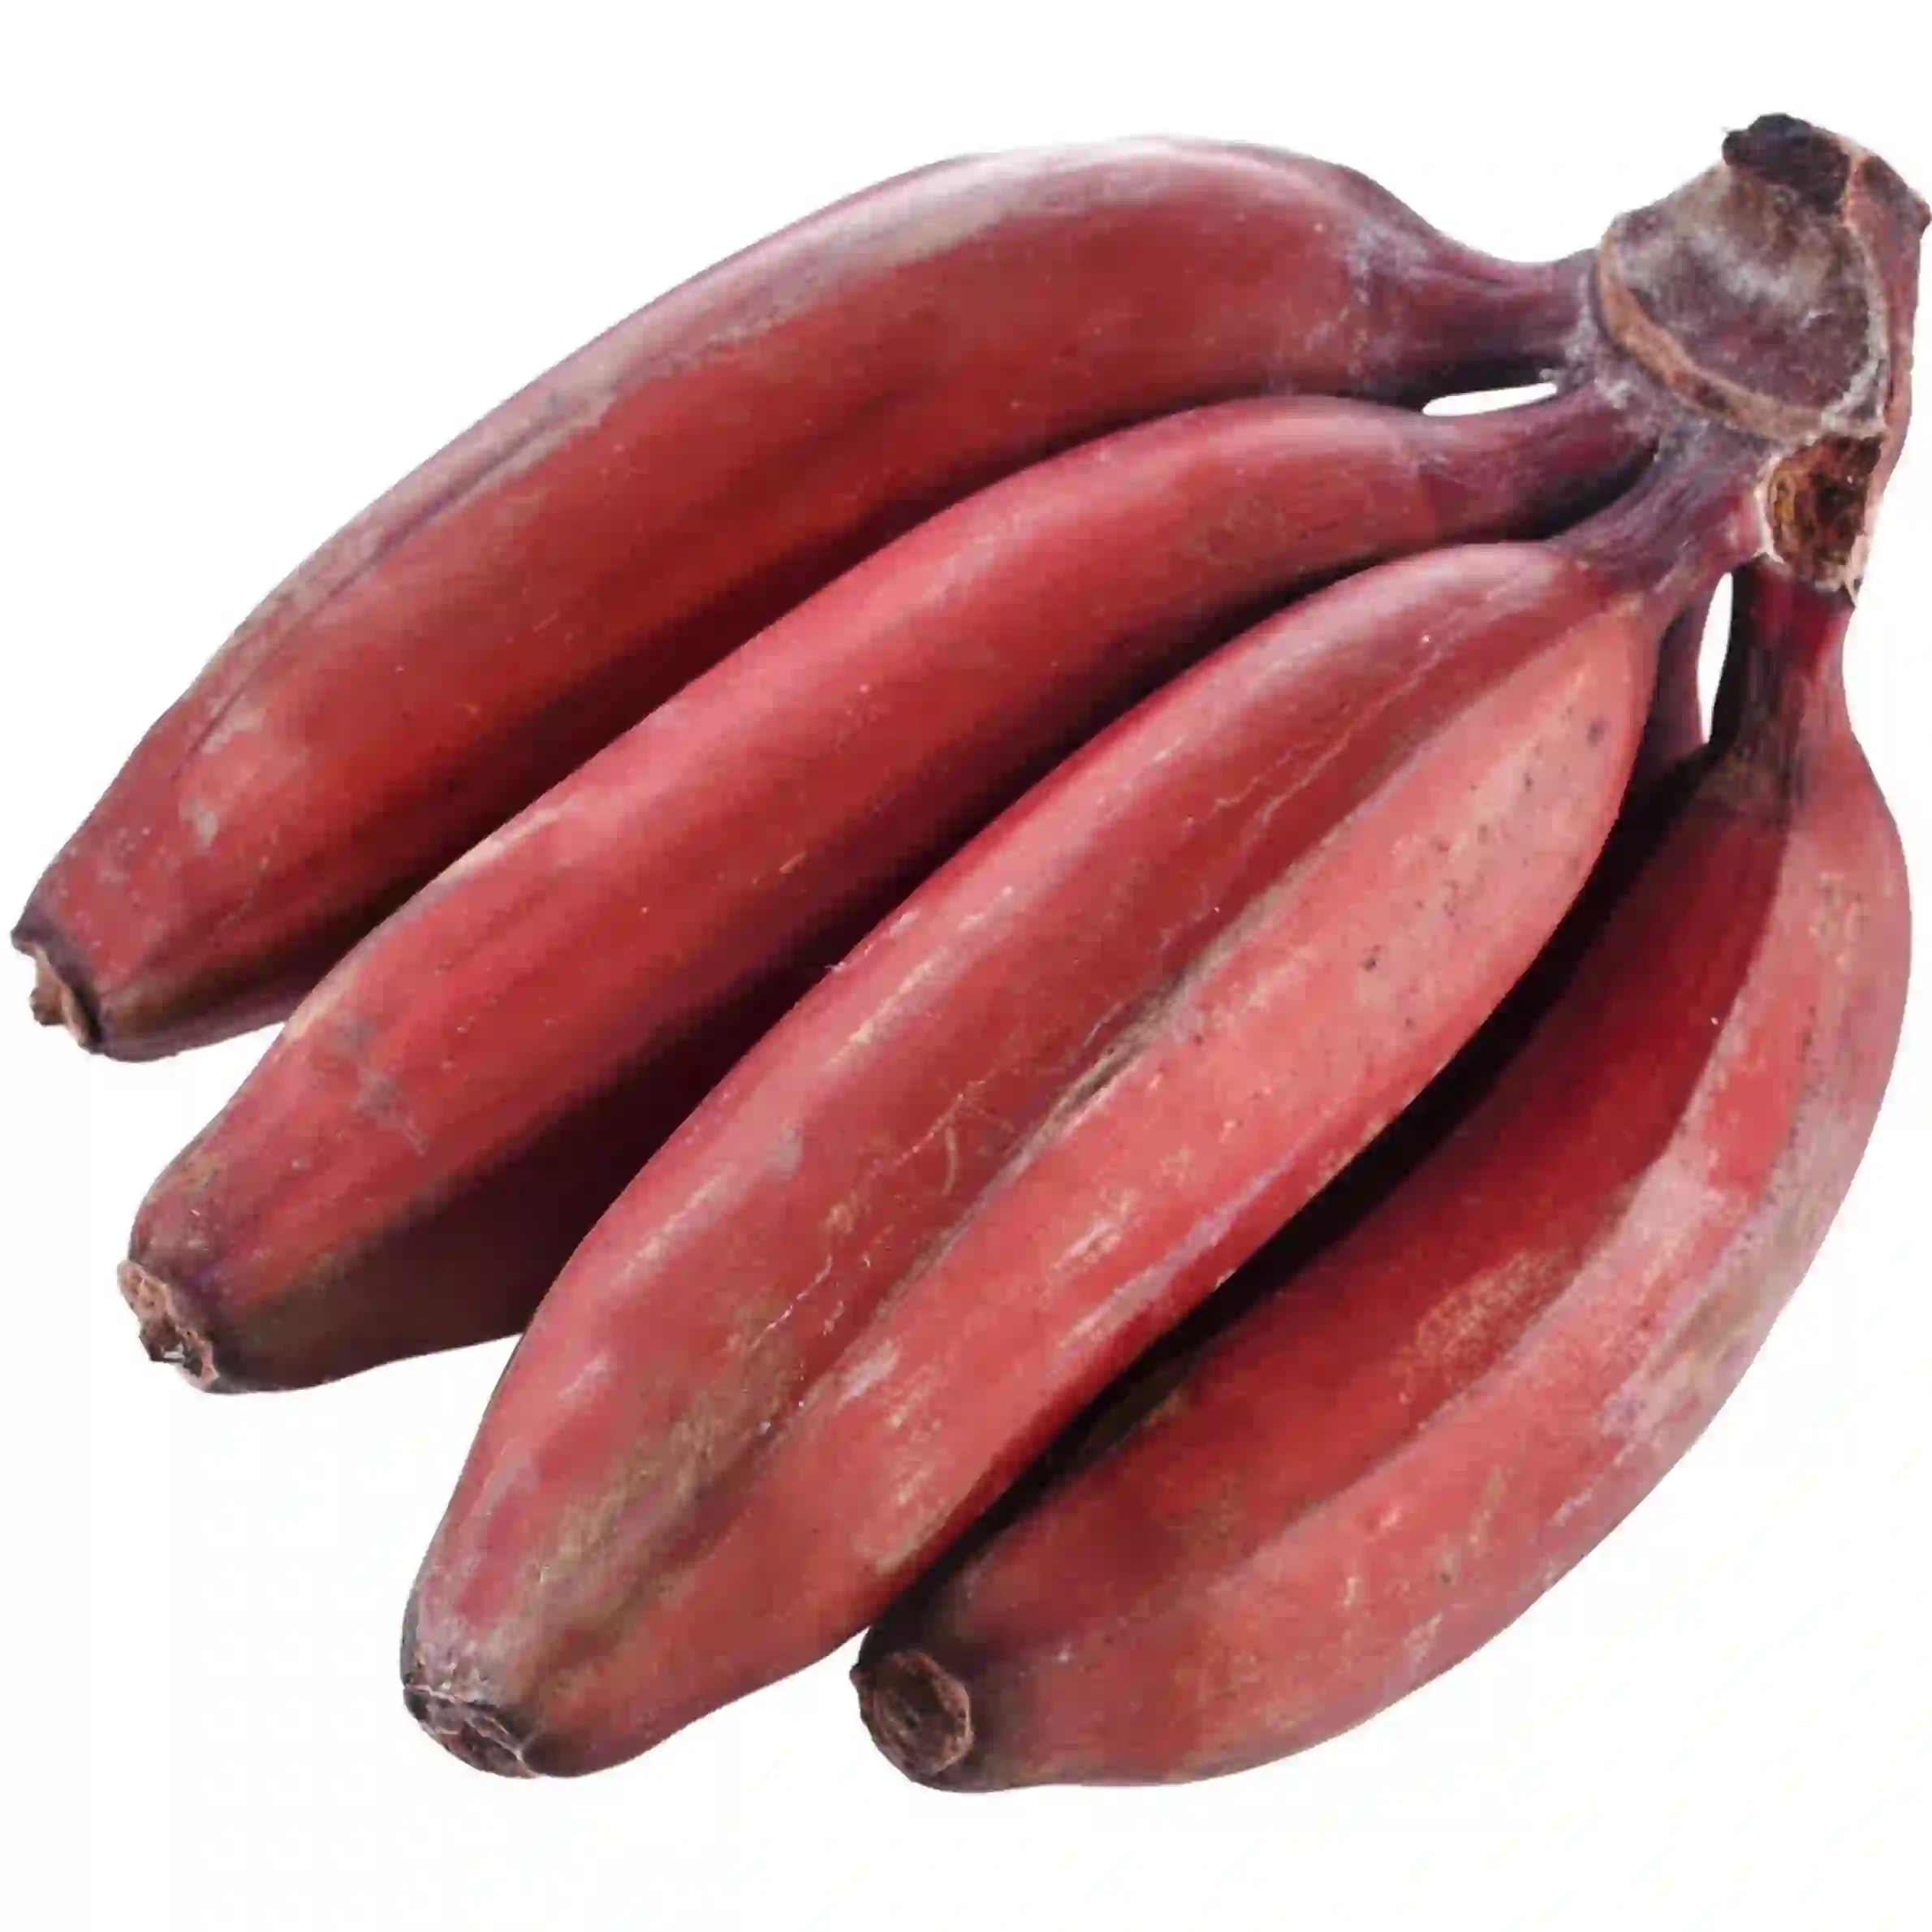 Red Banana Fruit